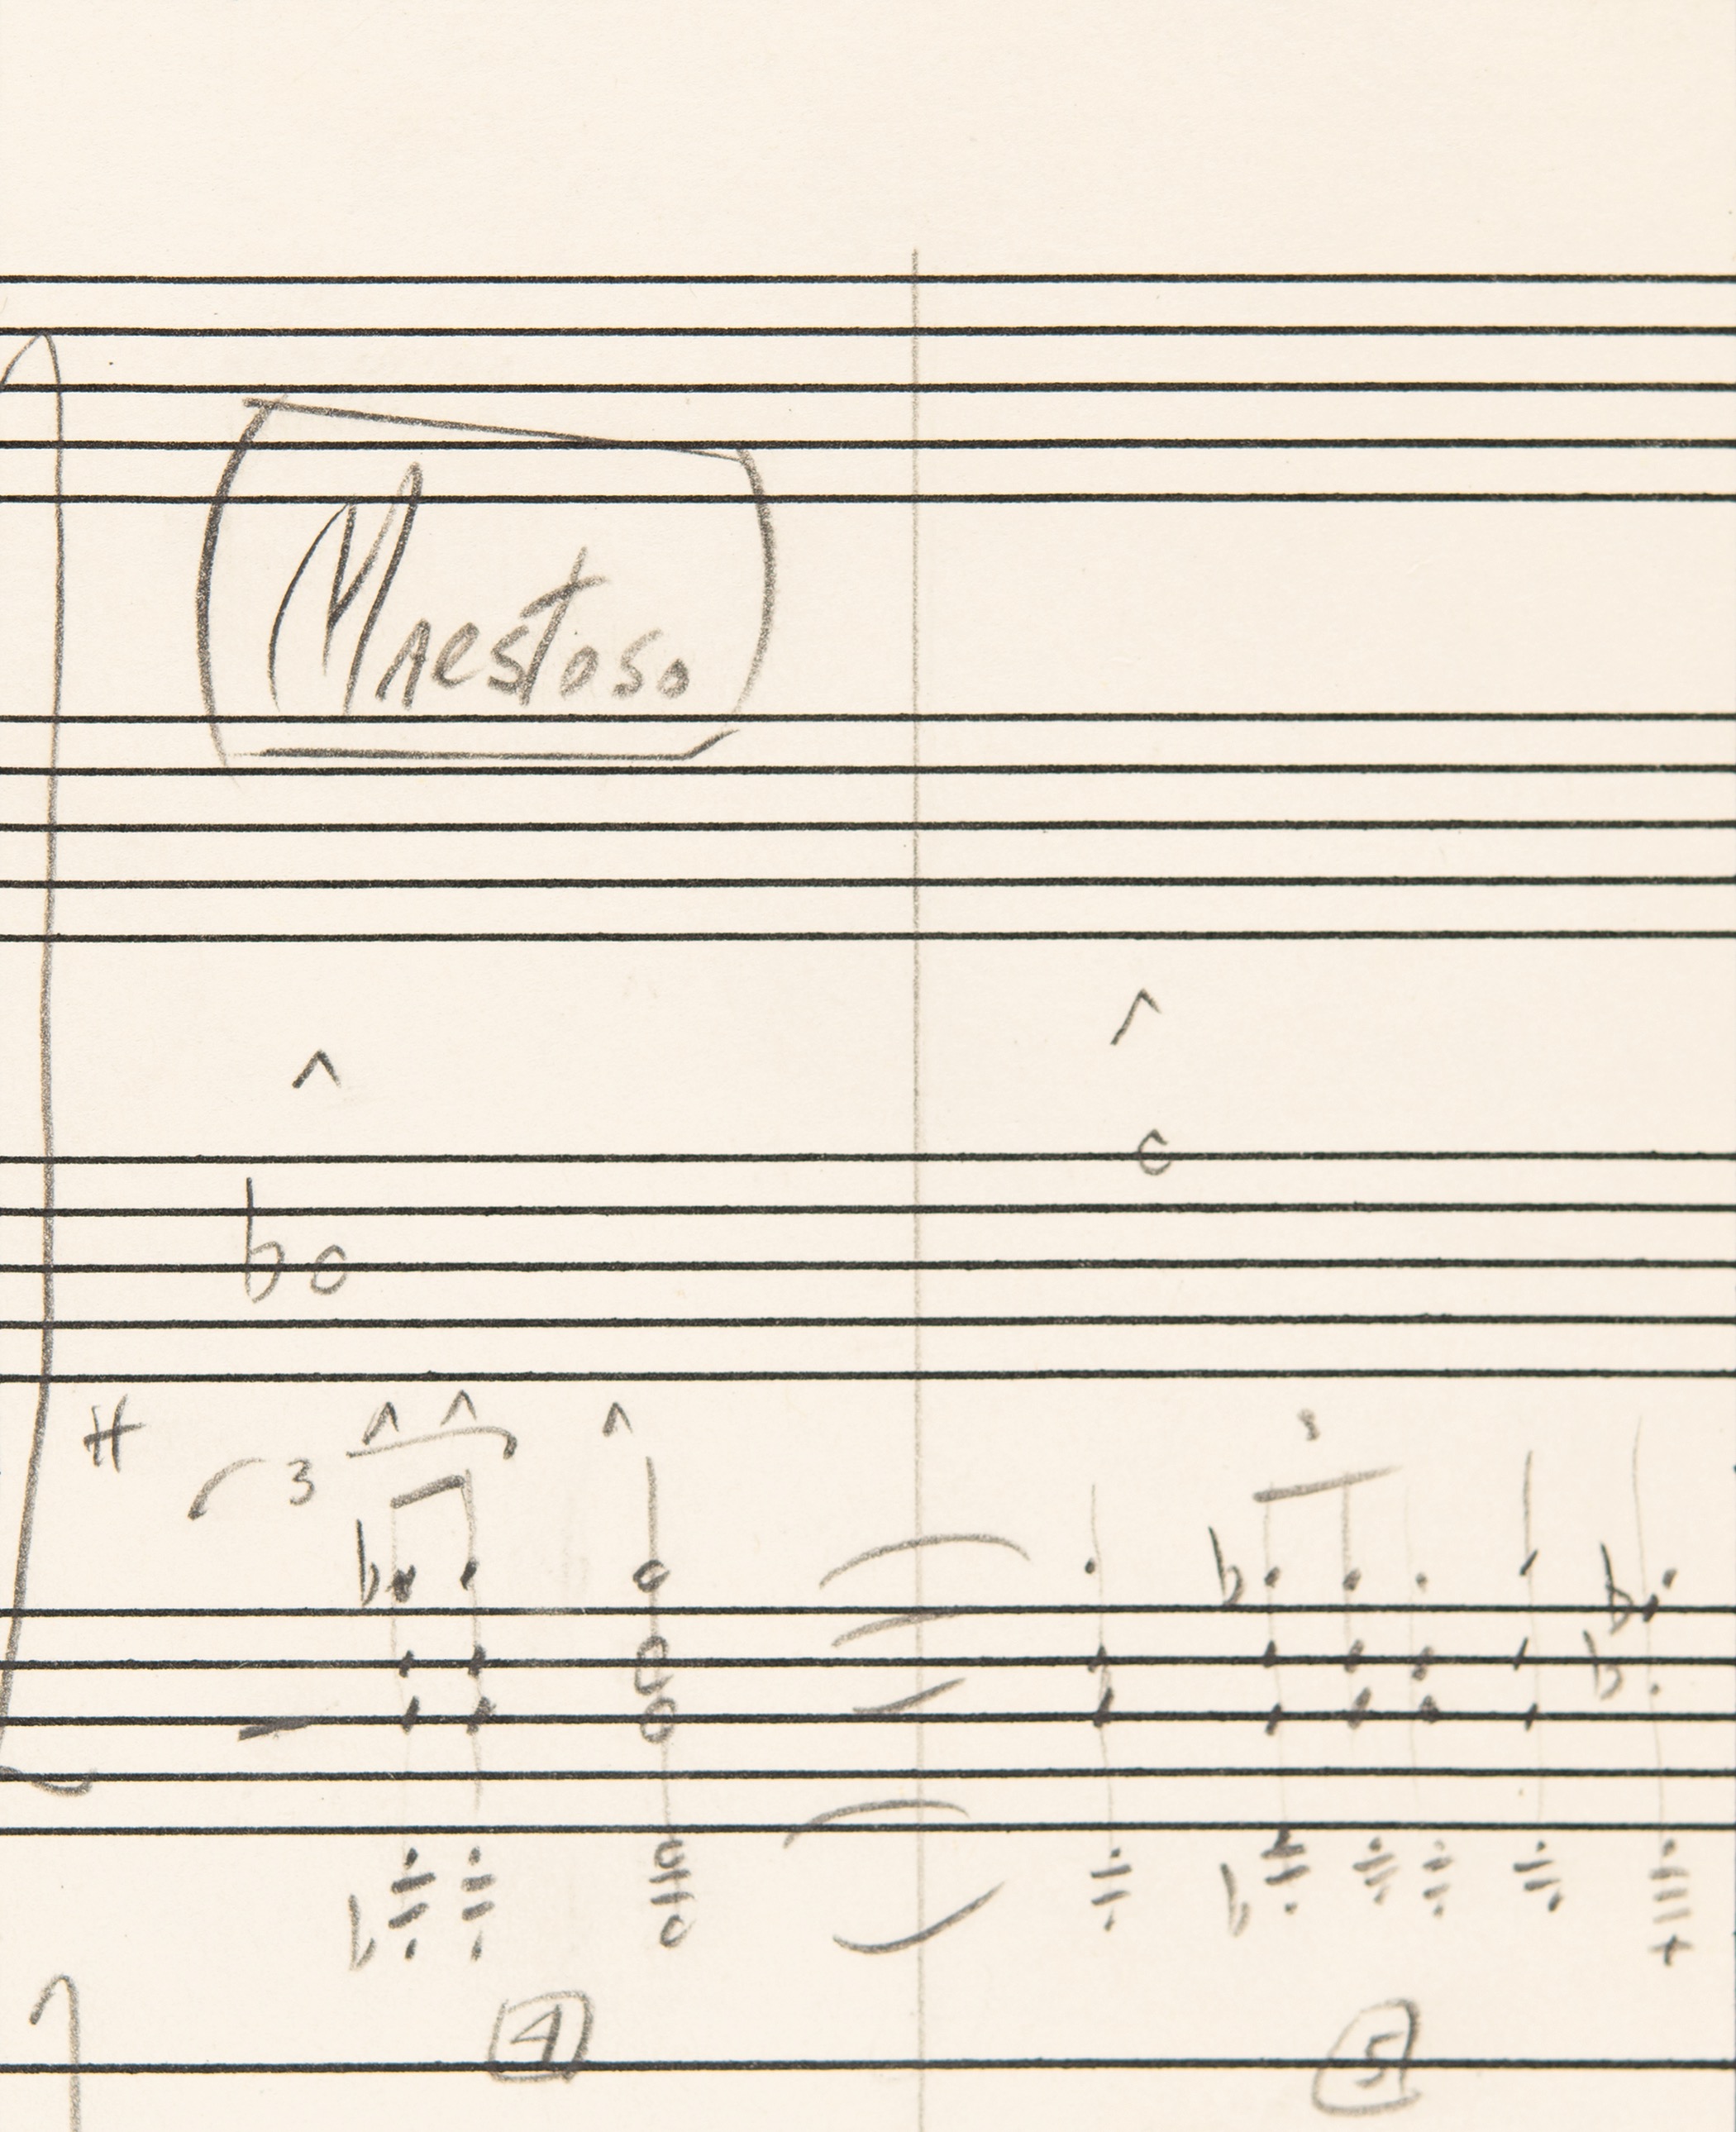 Lot #4046 Star Wars: John Williams Original Handwritten Music Manuscript for the Opening 'Star Wars Main Title' Theme - Image 6